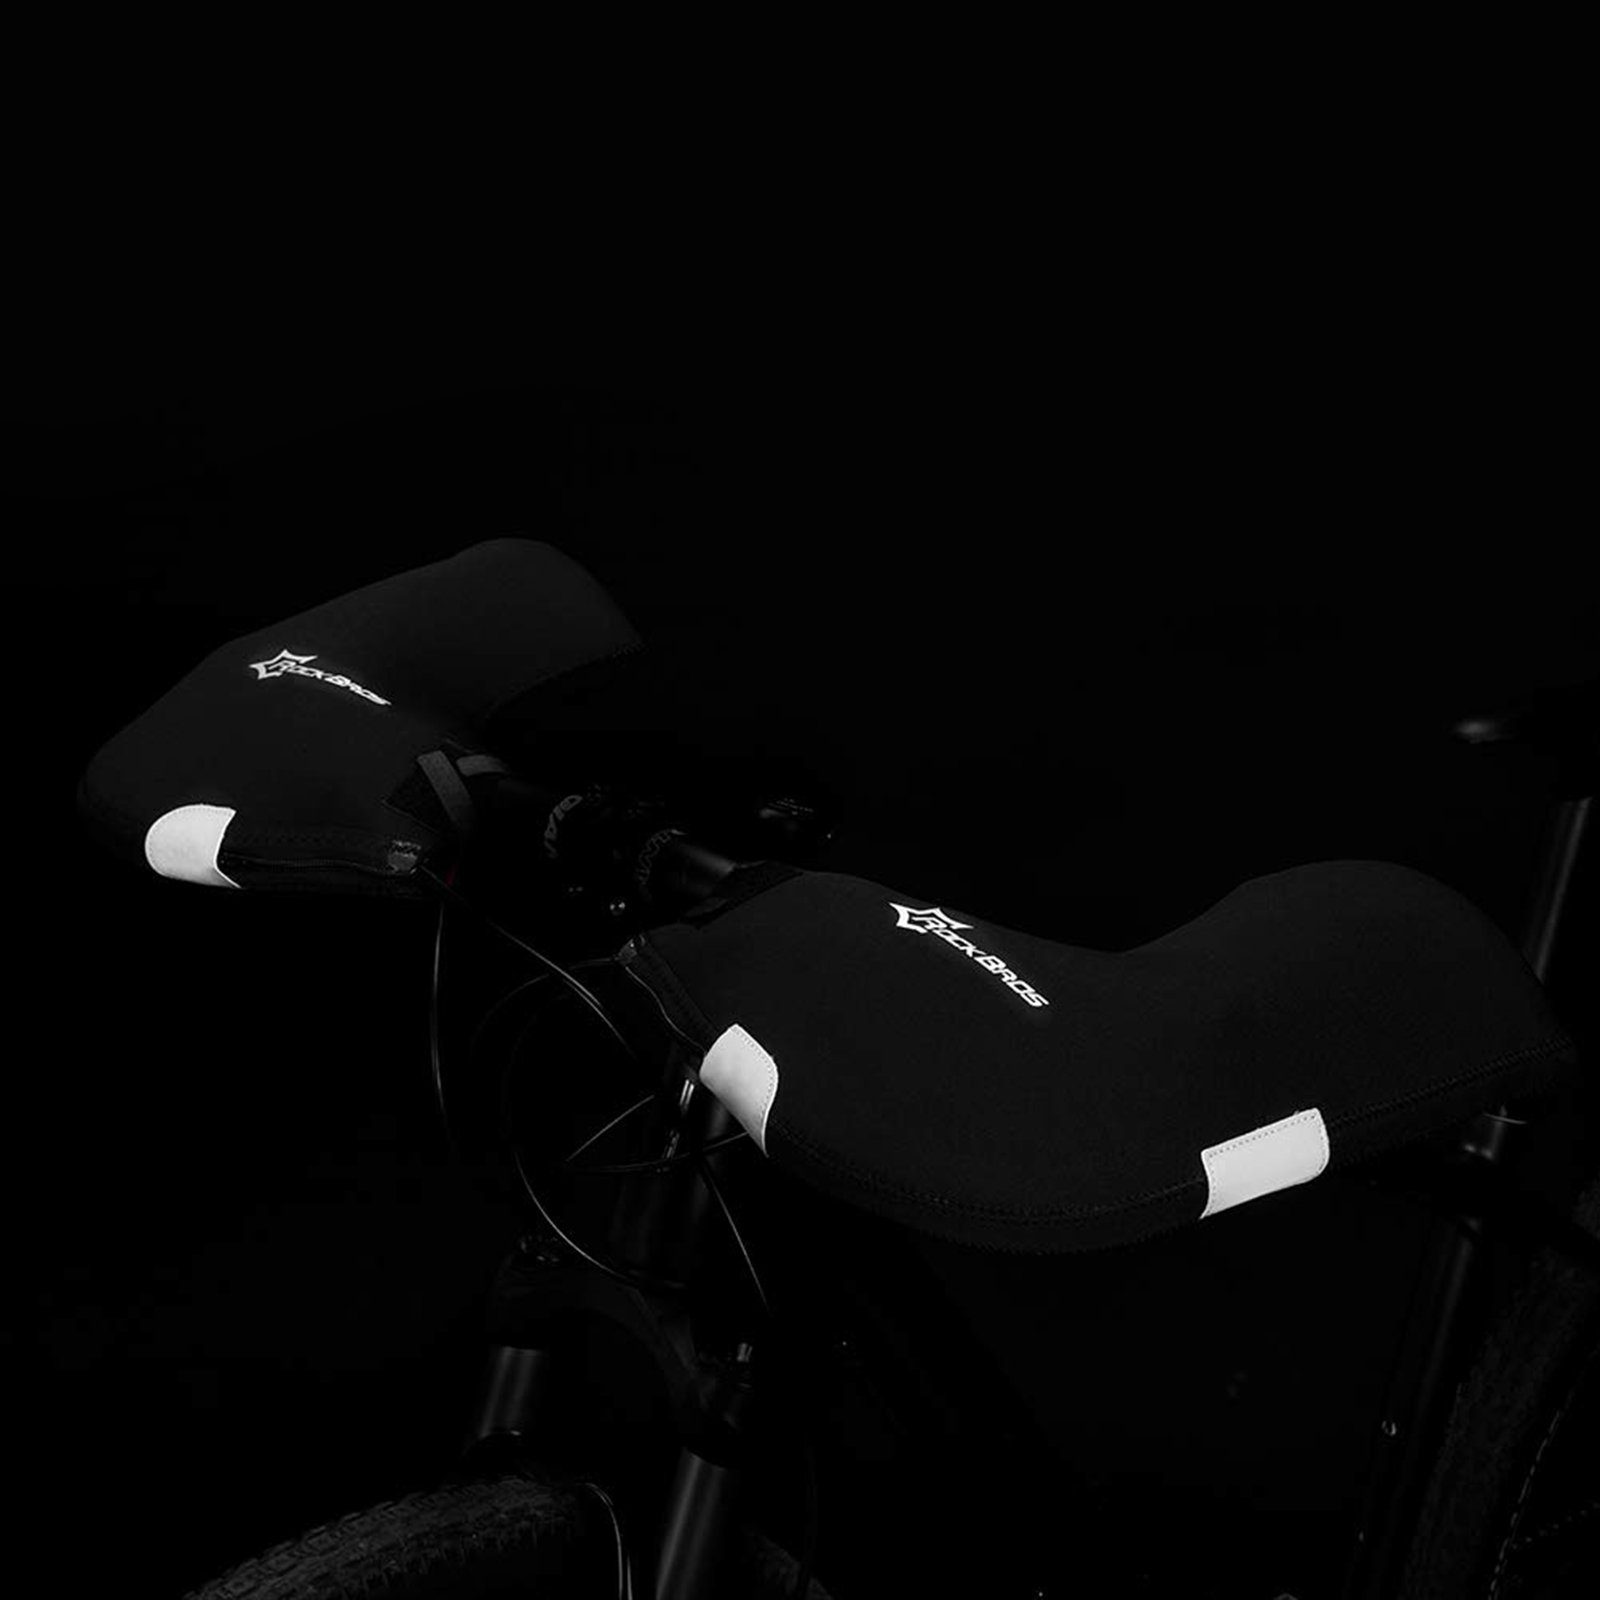 ROCKBROS Fahrradhandschuhe Lenkerstulpen Lenker Handschuhe Motorrad Wasserfest Gefüttert schwarz1 Scooter Roller für Fahrrad Winddicht Reflektierend